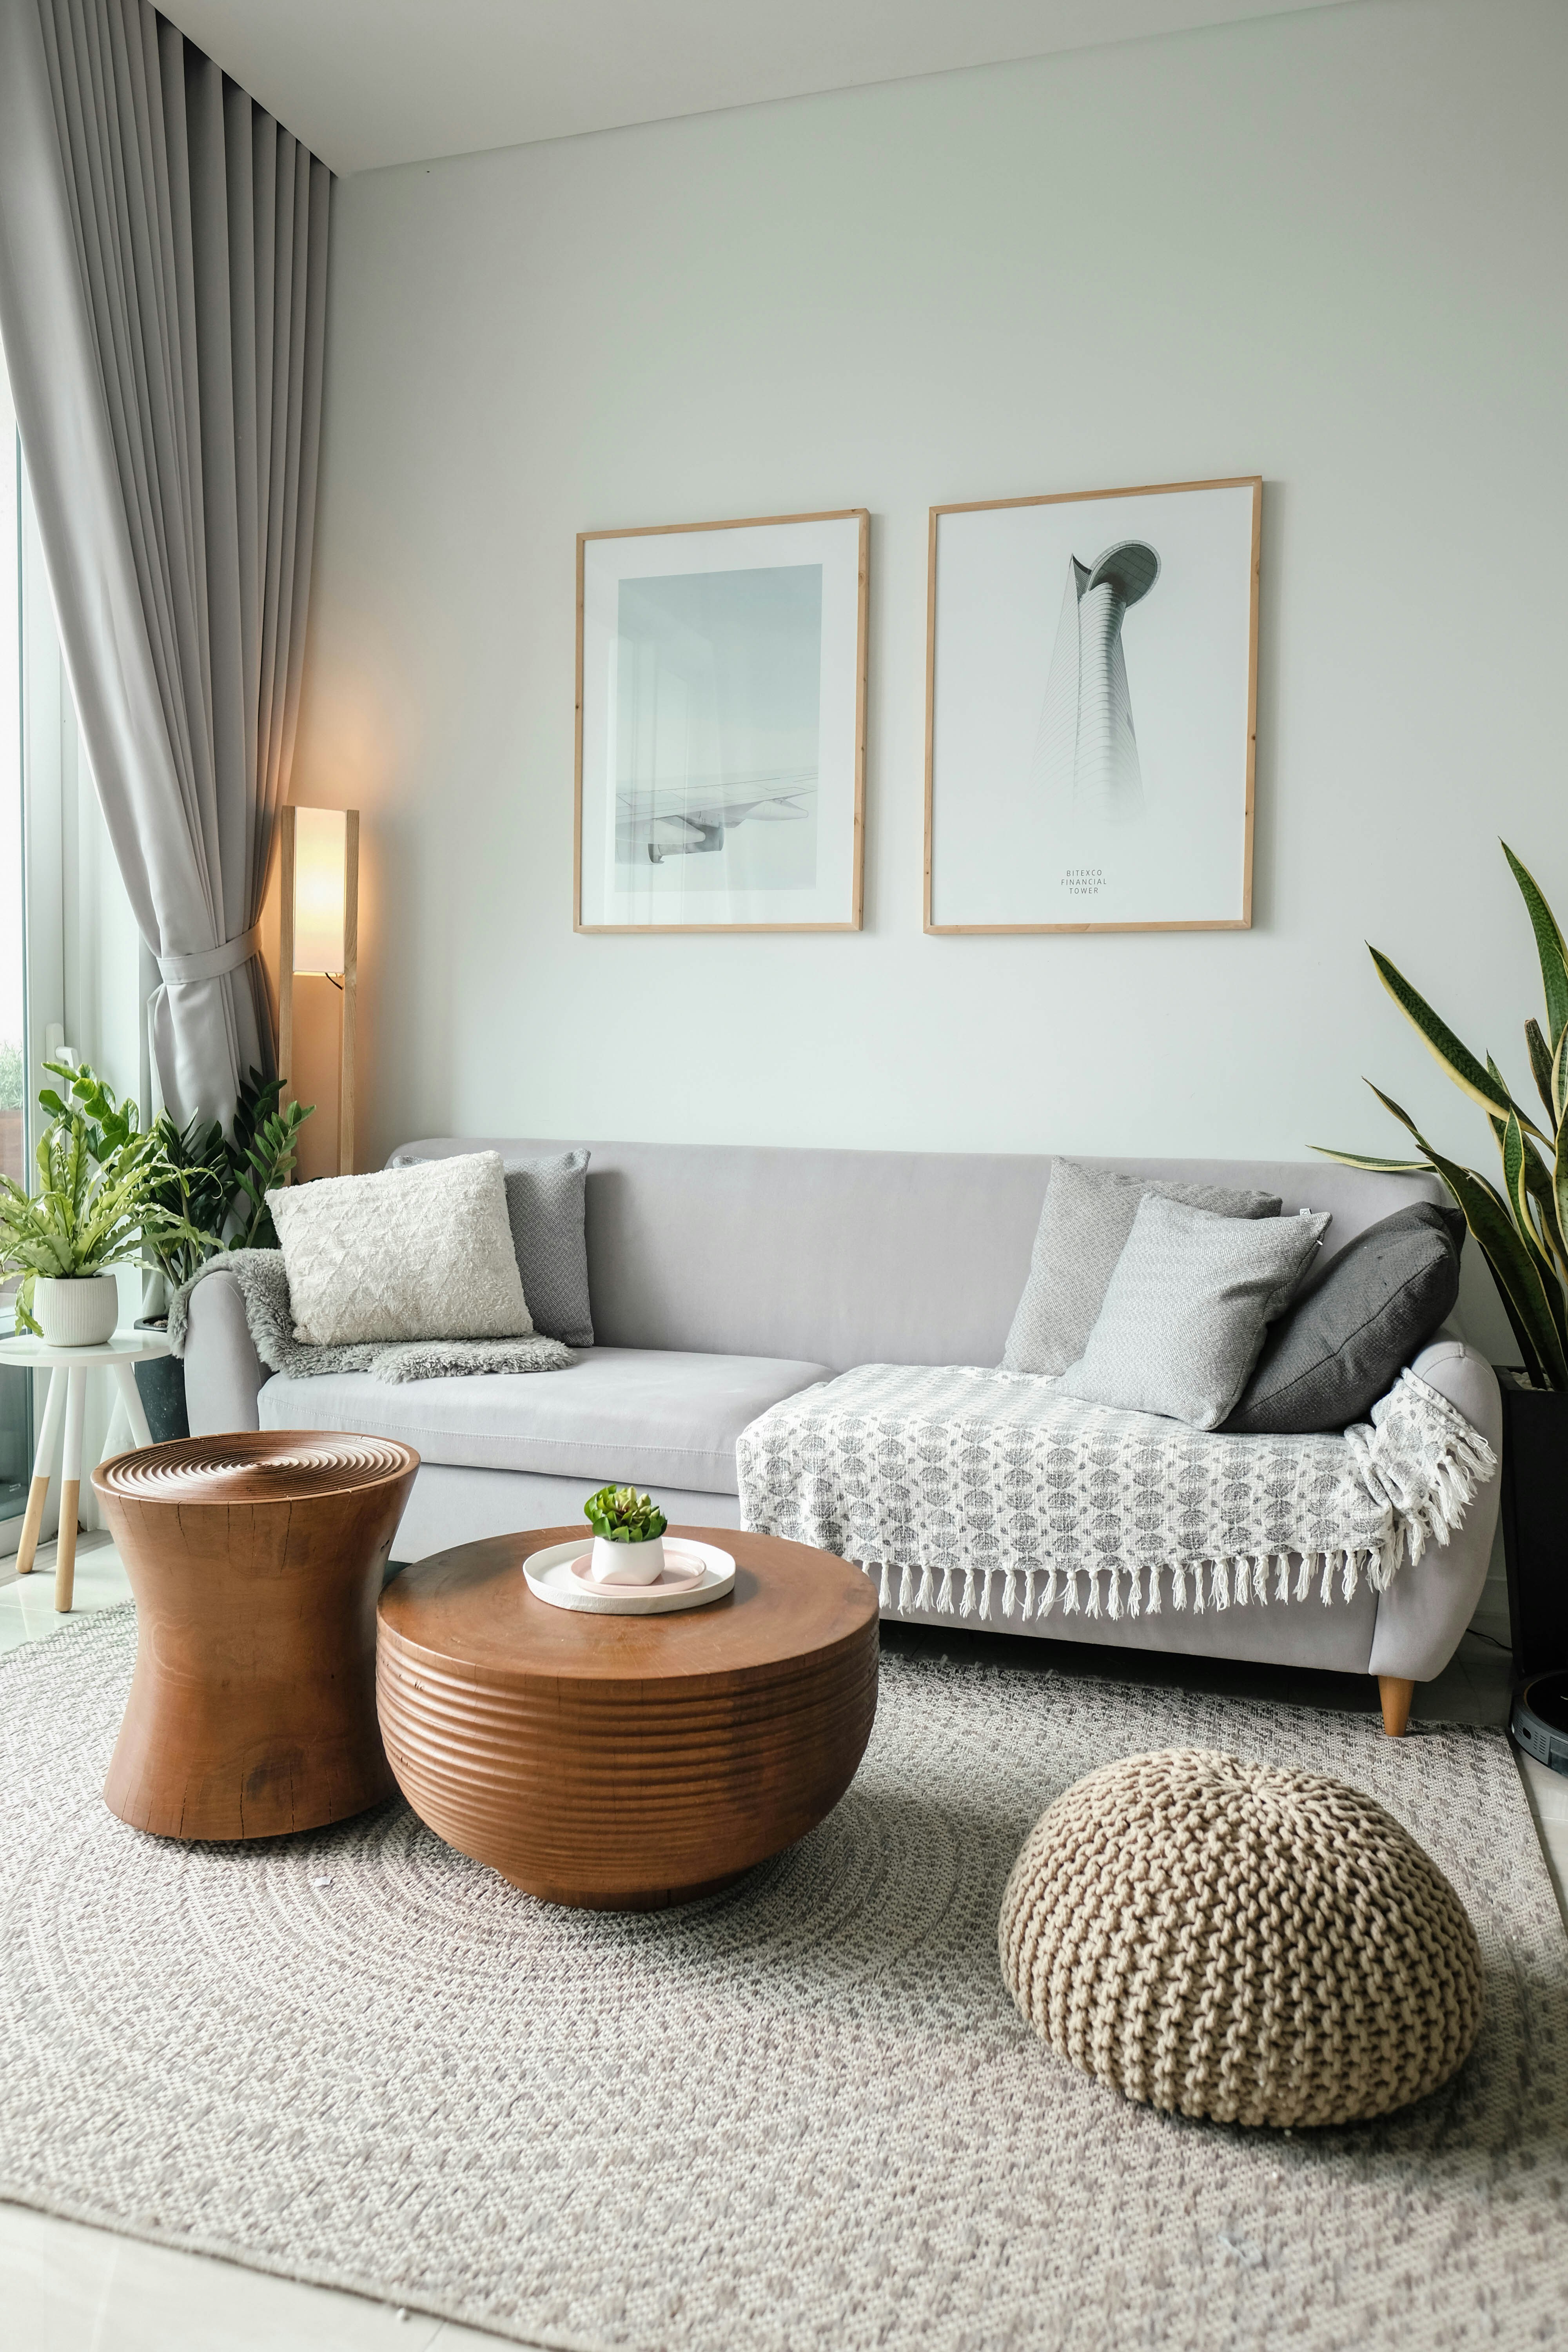 A cozy living room | Source: Unsplash